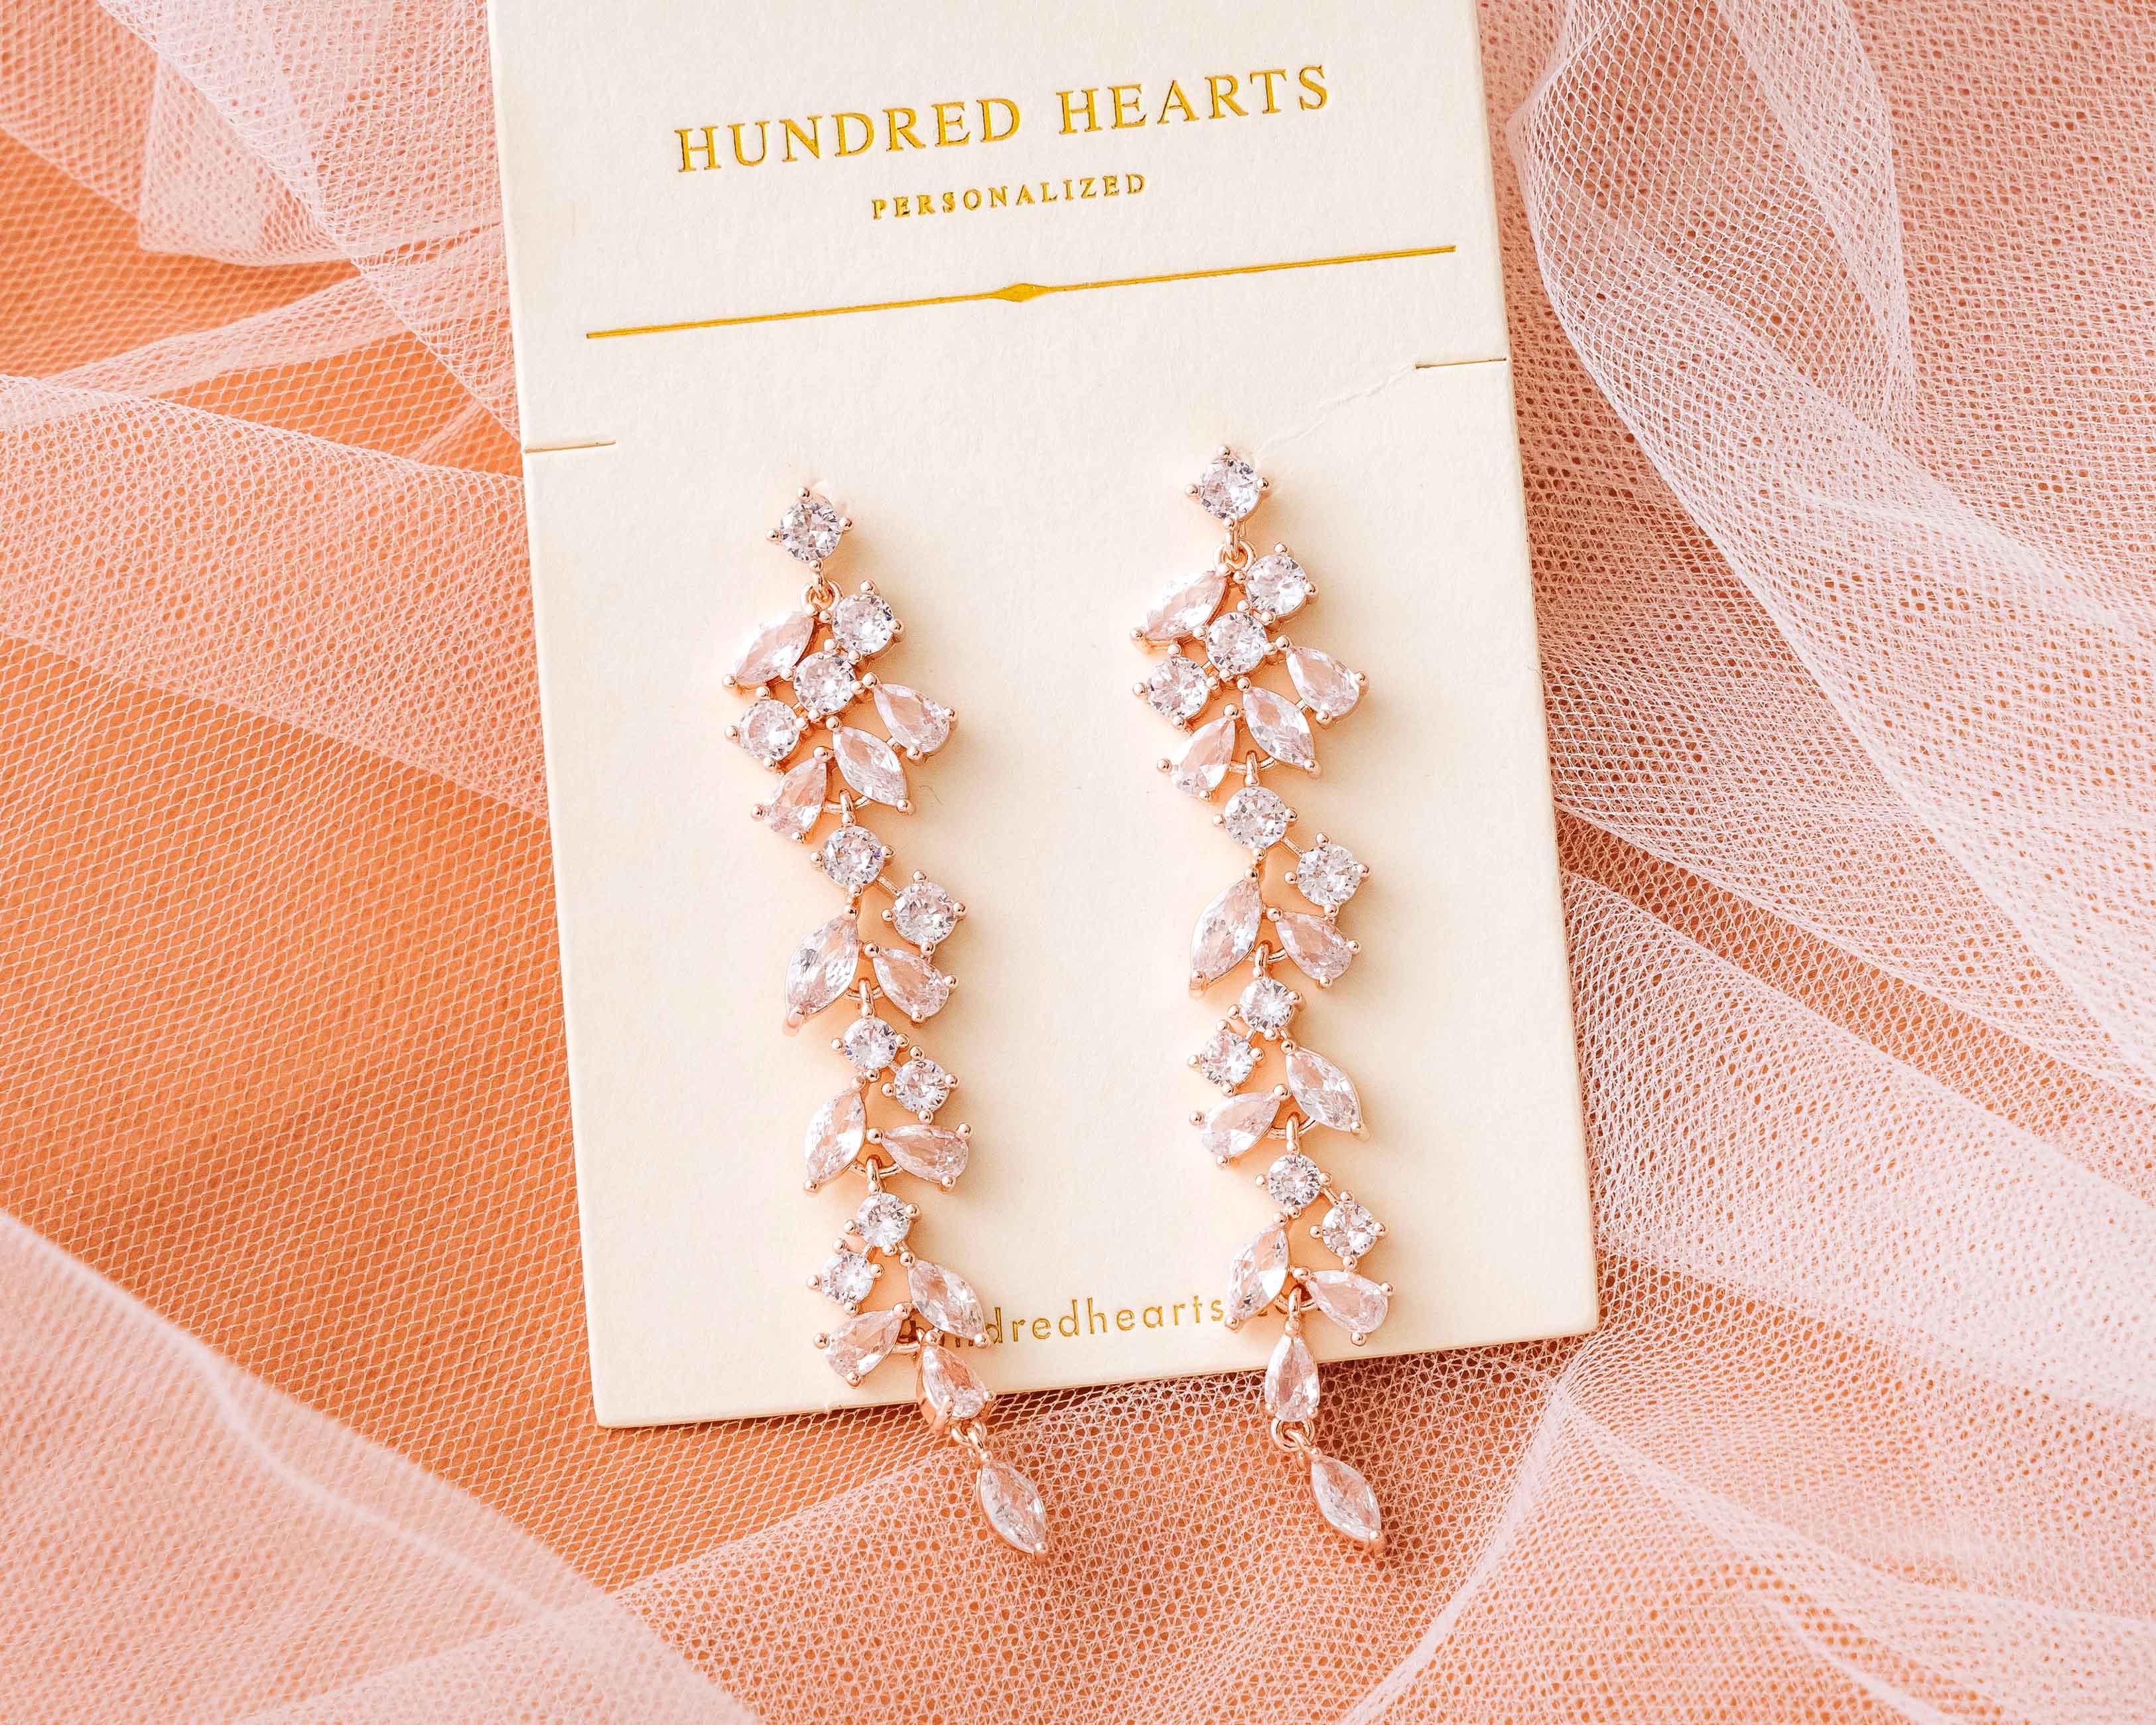 Rosegold Crystal Dangle Earrings - The perfect wedding earrings.